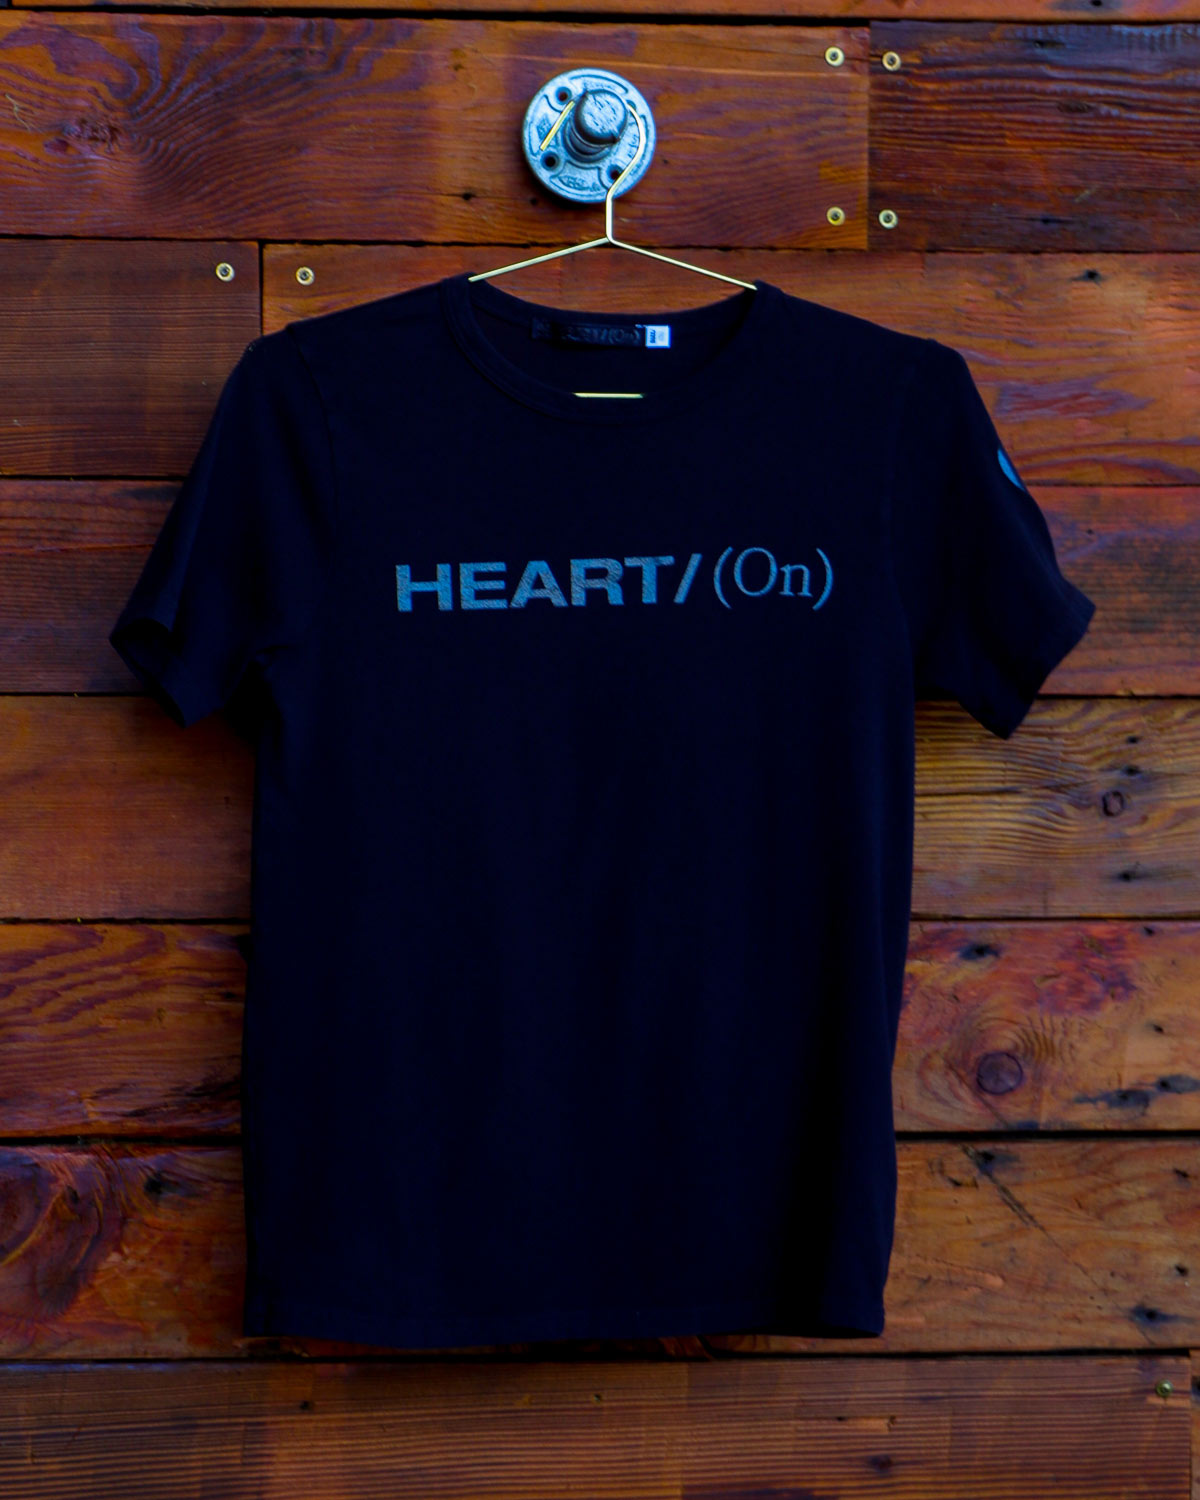 Black Heart On logo t-shirt hanging on wood wall